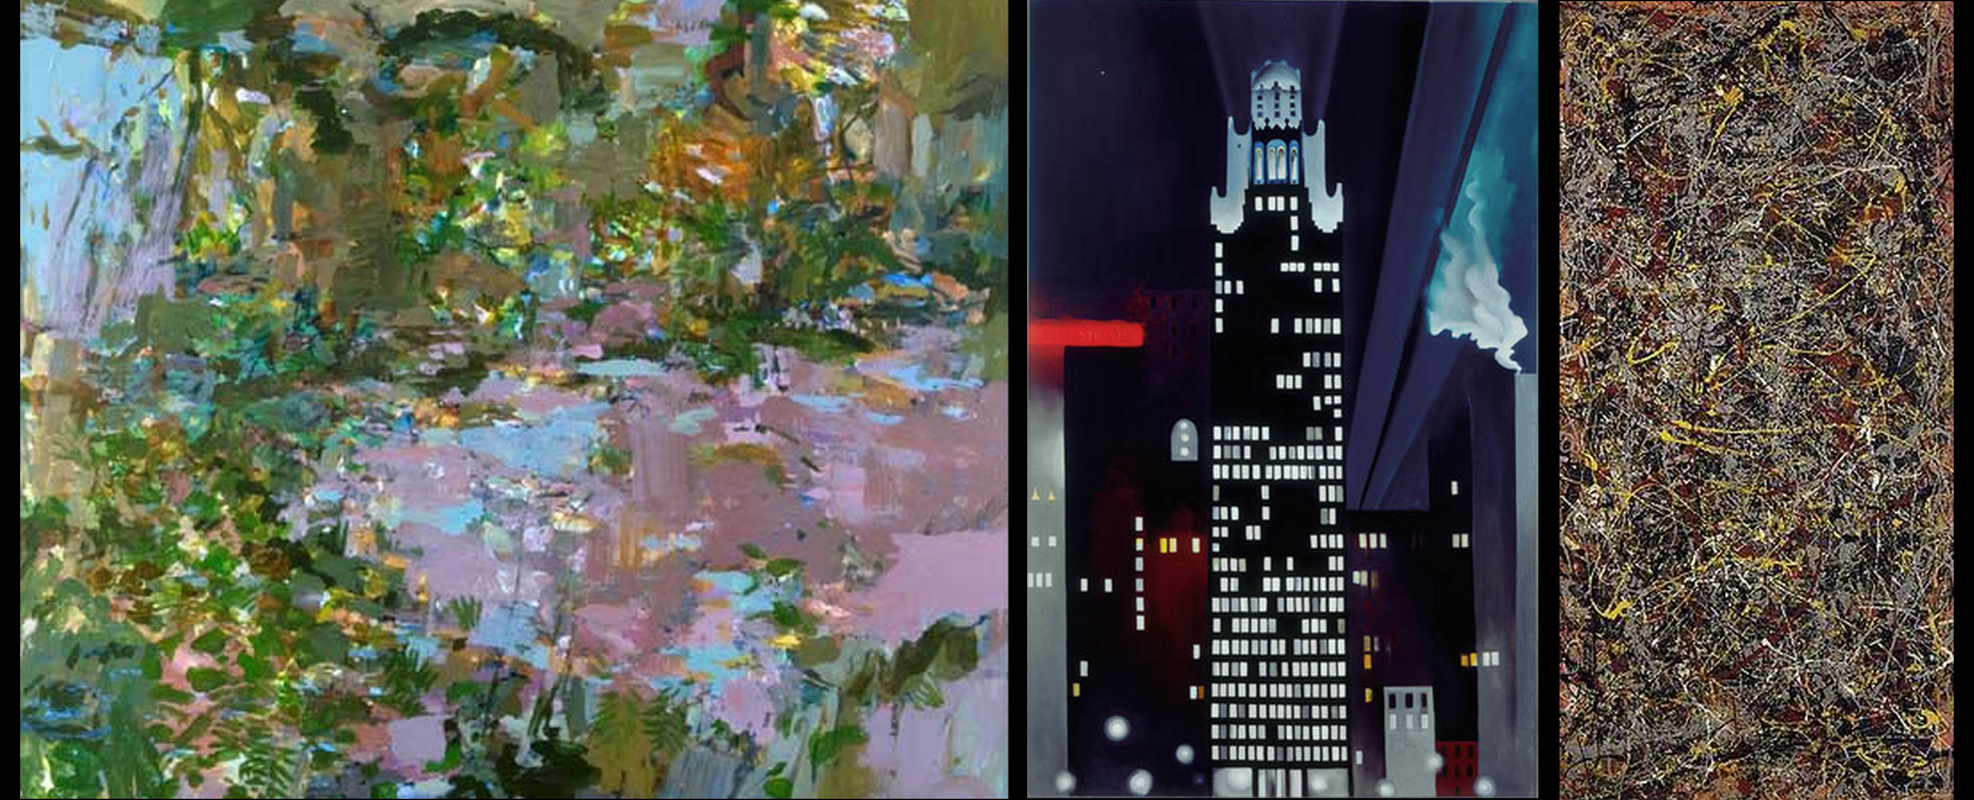 Left to Right: Rebecca Allan, "Vernal Pool, Ferns" (2009); Georgia O'Keeffe, "Radiator Building" (1924); Jackson Pollock, "No. 5" (1948)